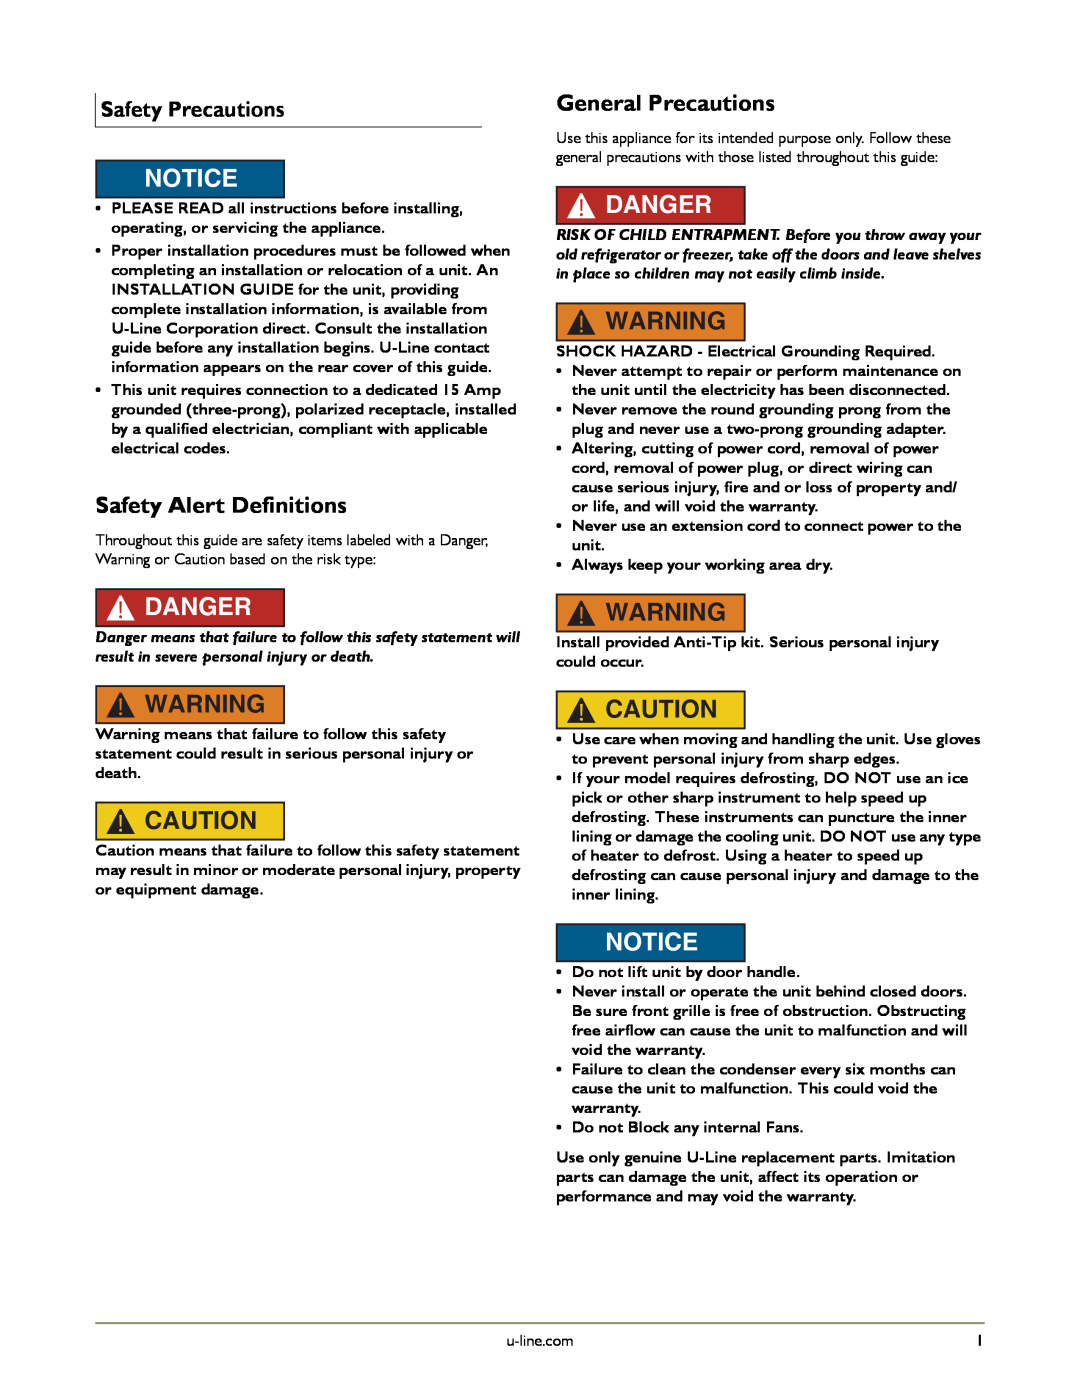 U-Line U-CO29WHTP-20, U-2175RFS-01, U-2175RFS-00 Danger, Safety Alert Definitions, General Precautions, Safety Precautions 